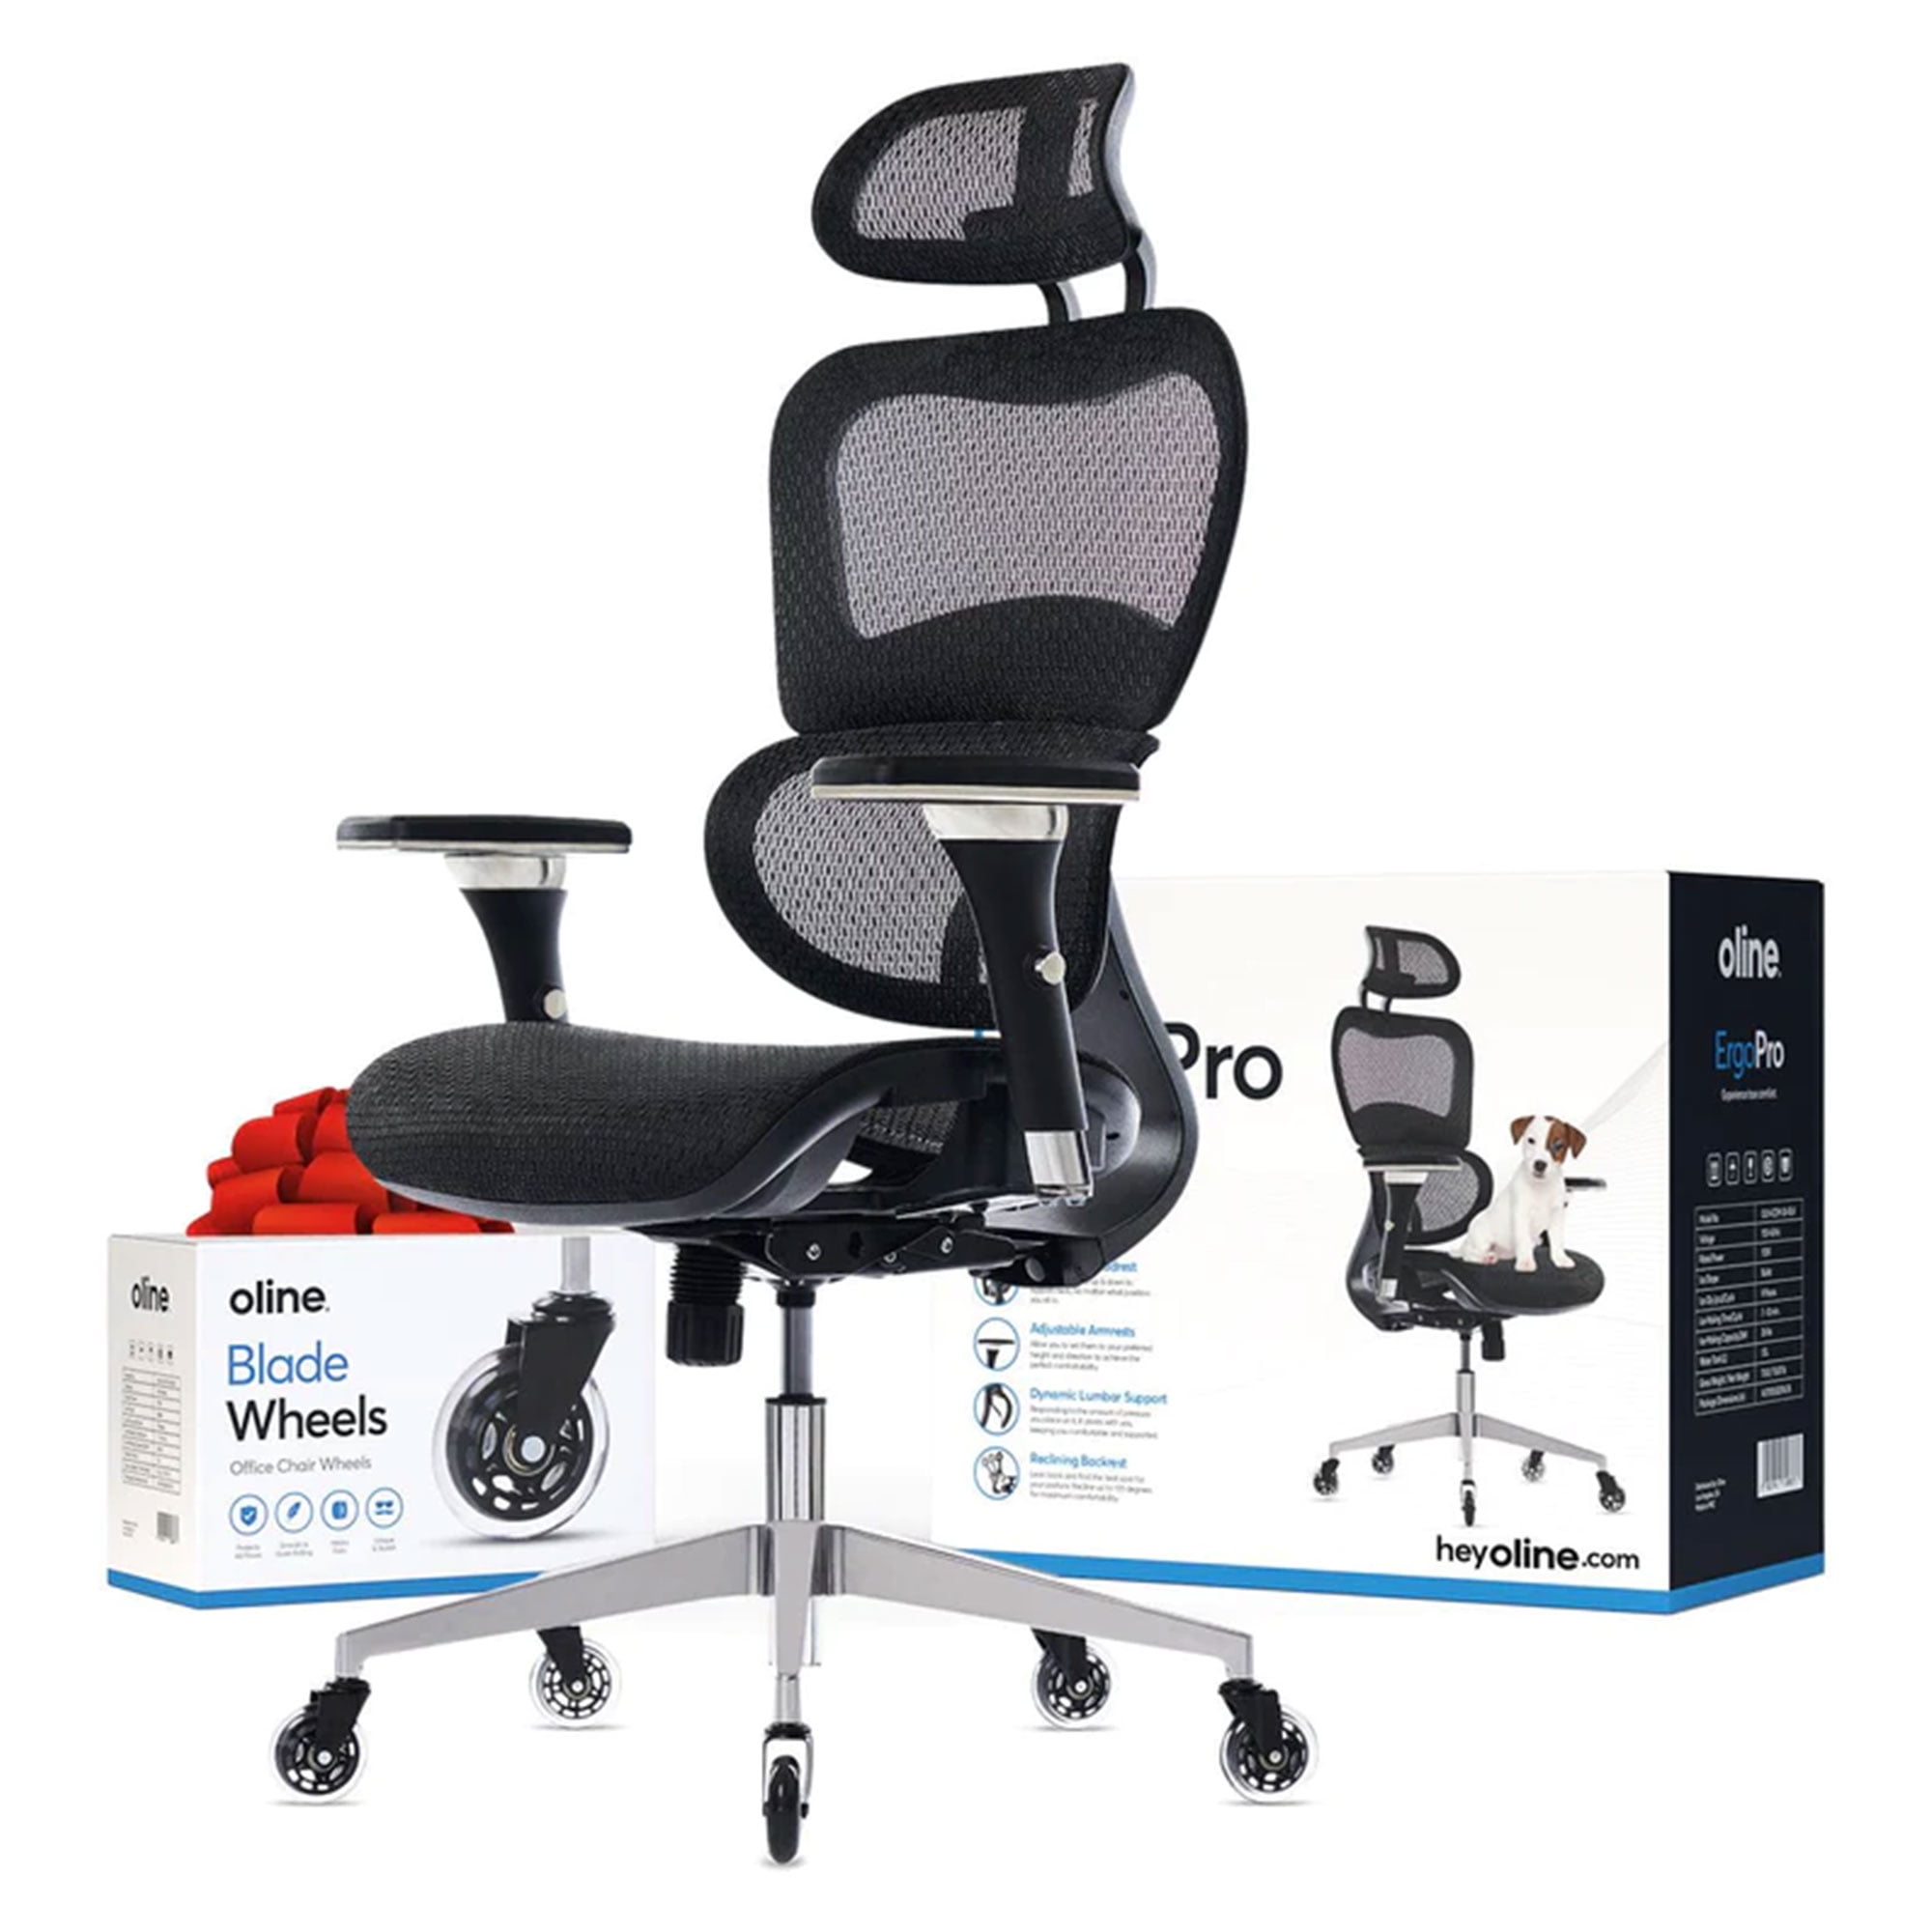 Dropship BestOffice PC Gaming Chair Ergonomic Office Chair Desk